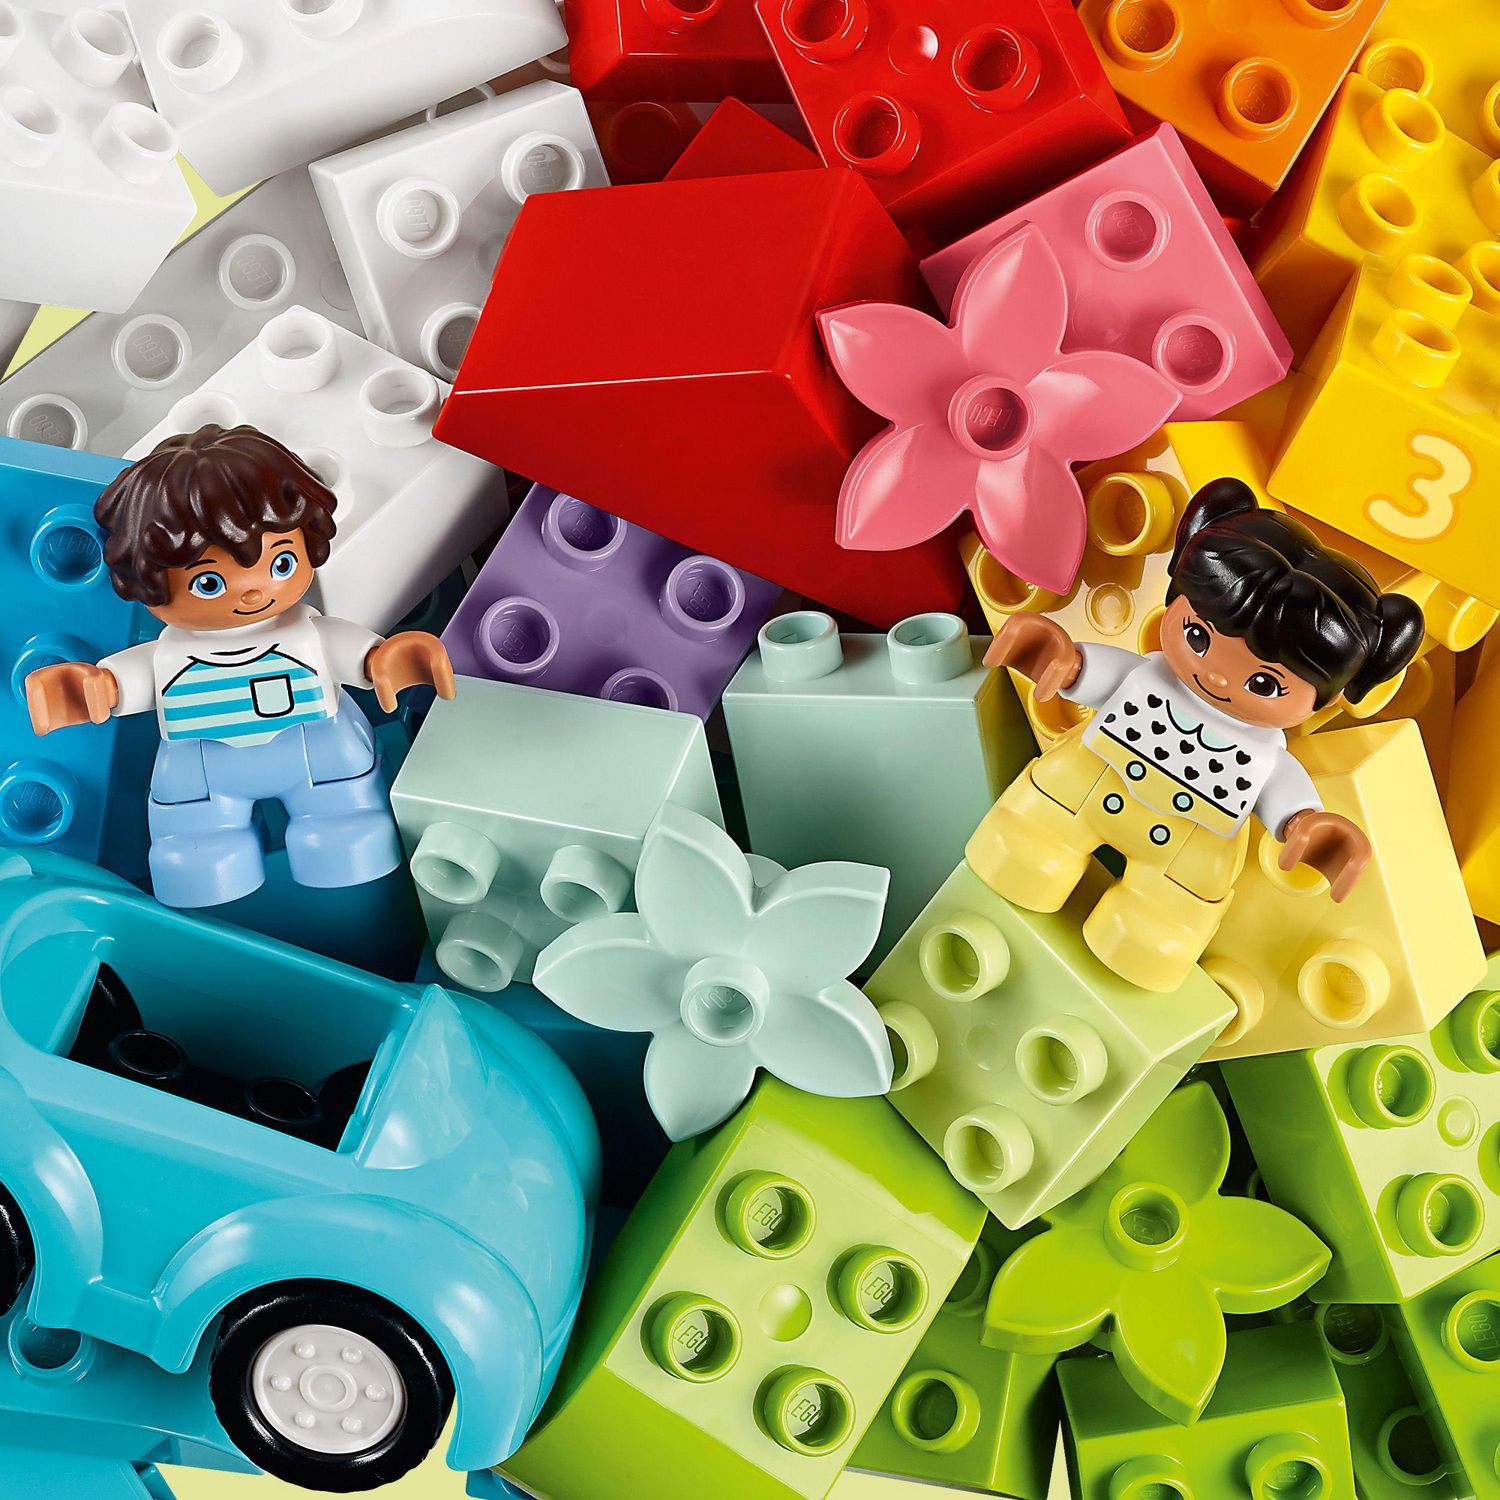 LEGO DUPLO Classic Brick Box 10913 Building Toy (65 Pieces)